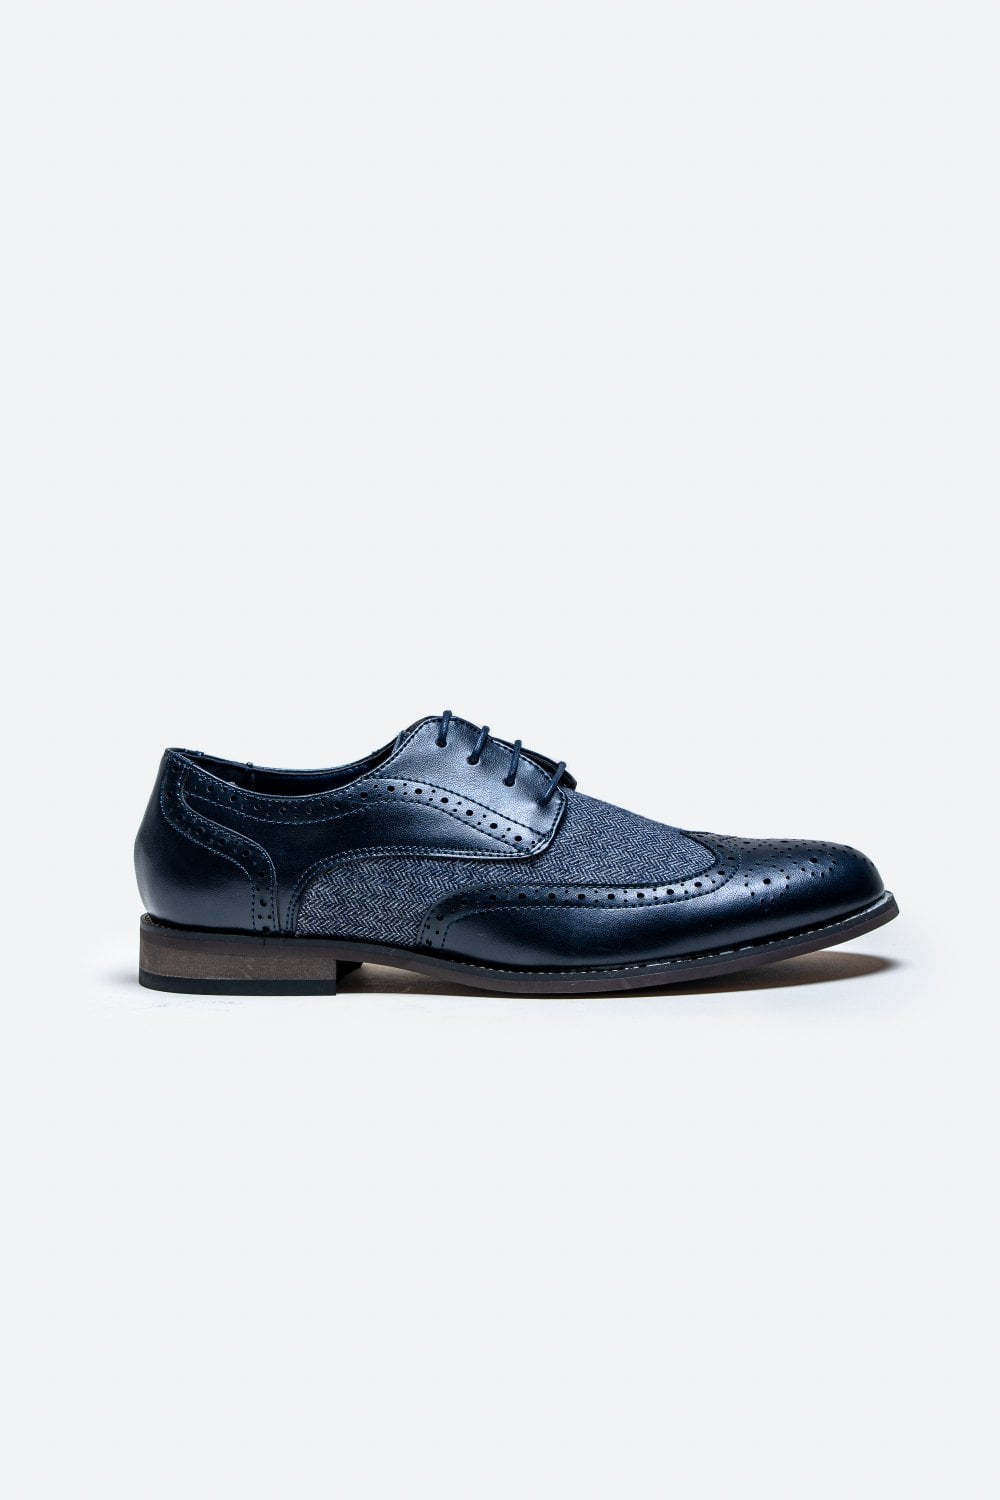 Chaussures Cavani Oliver Tweed - Bleu Marine - Schoenen